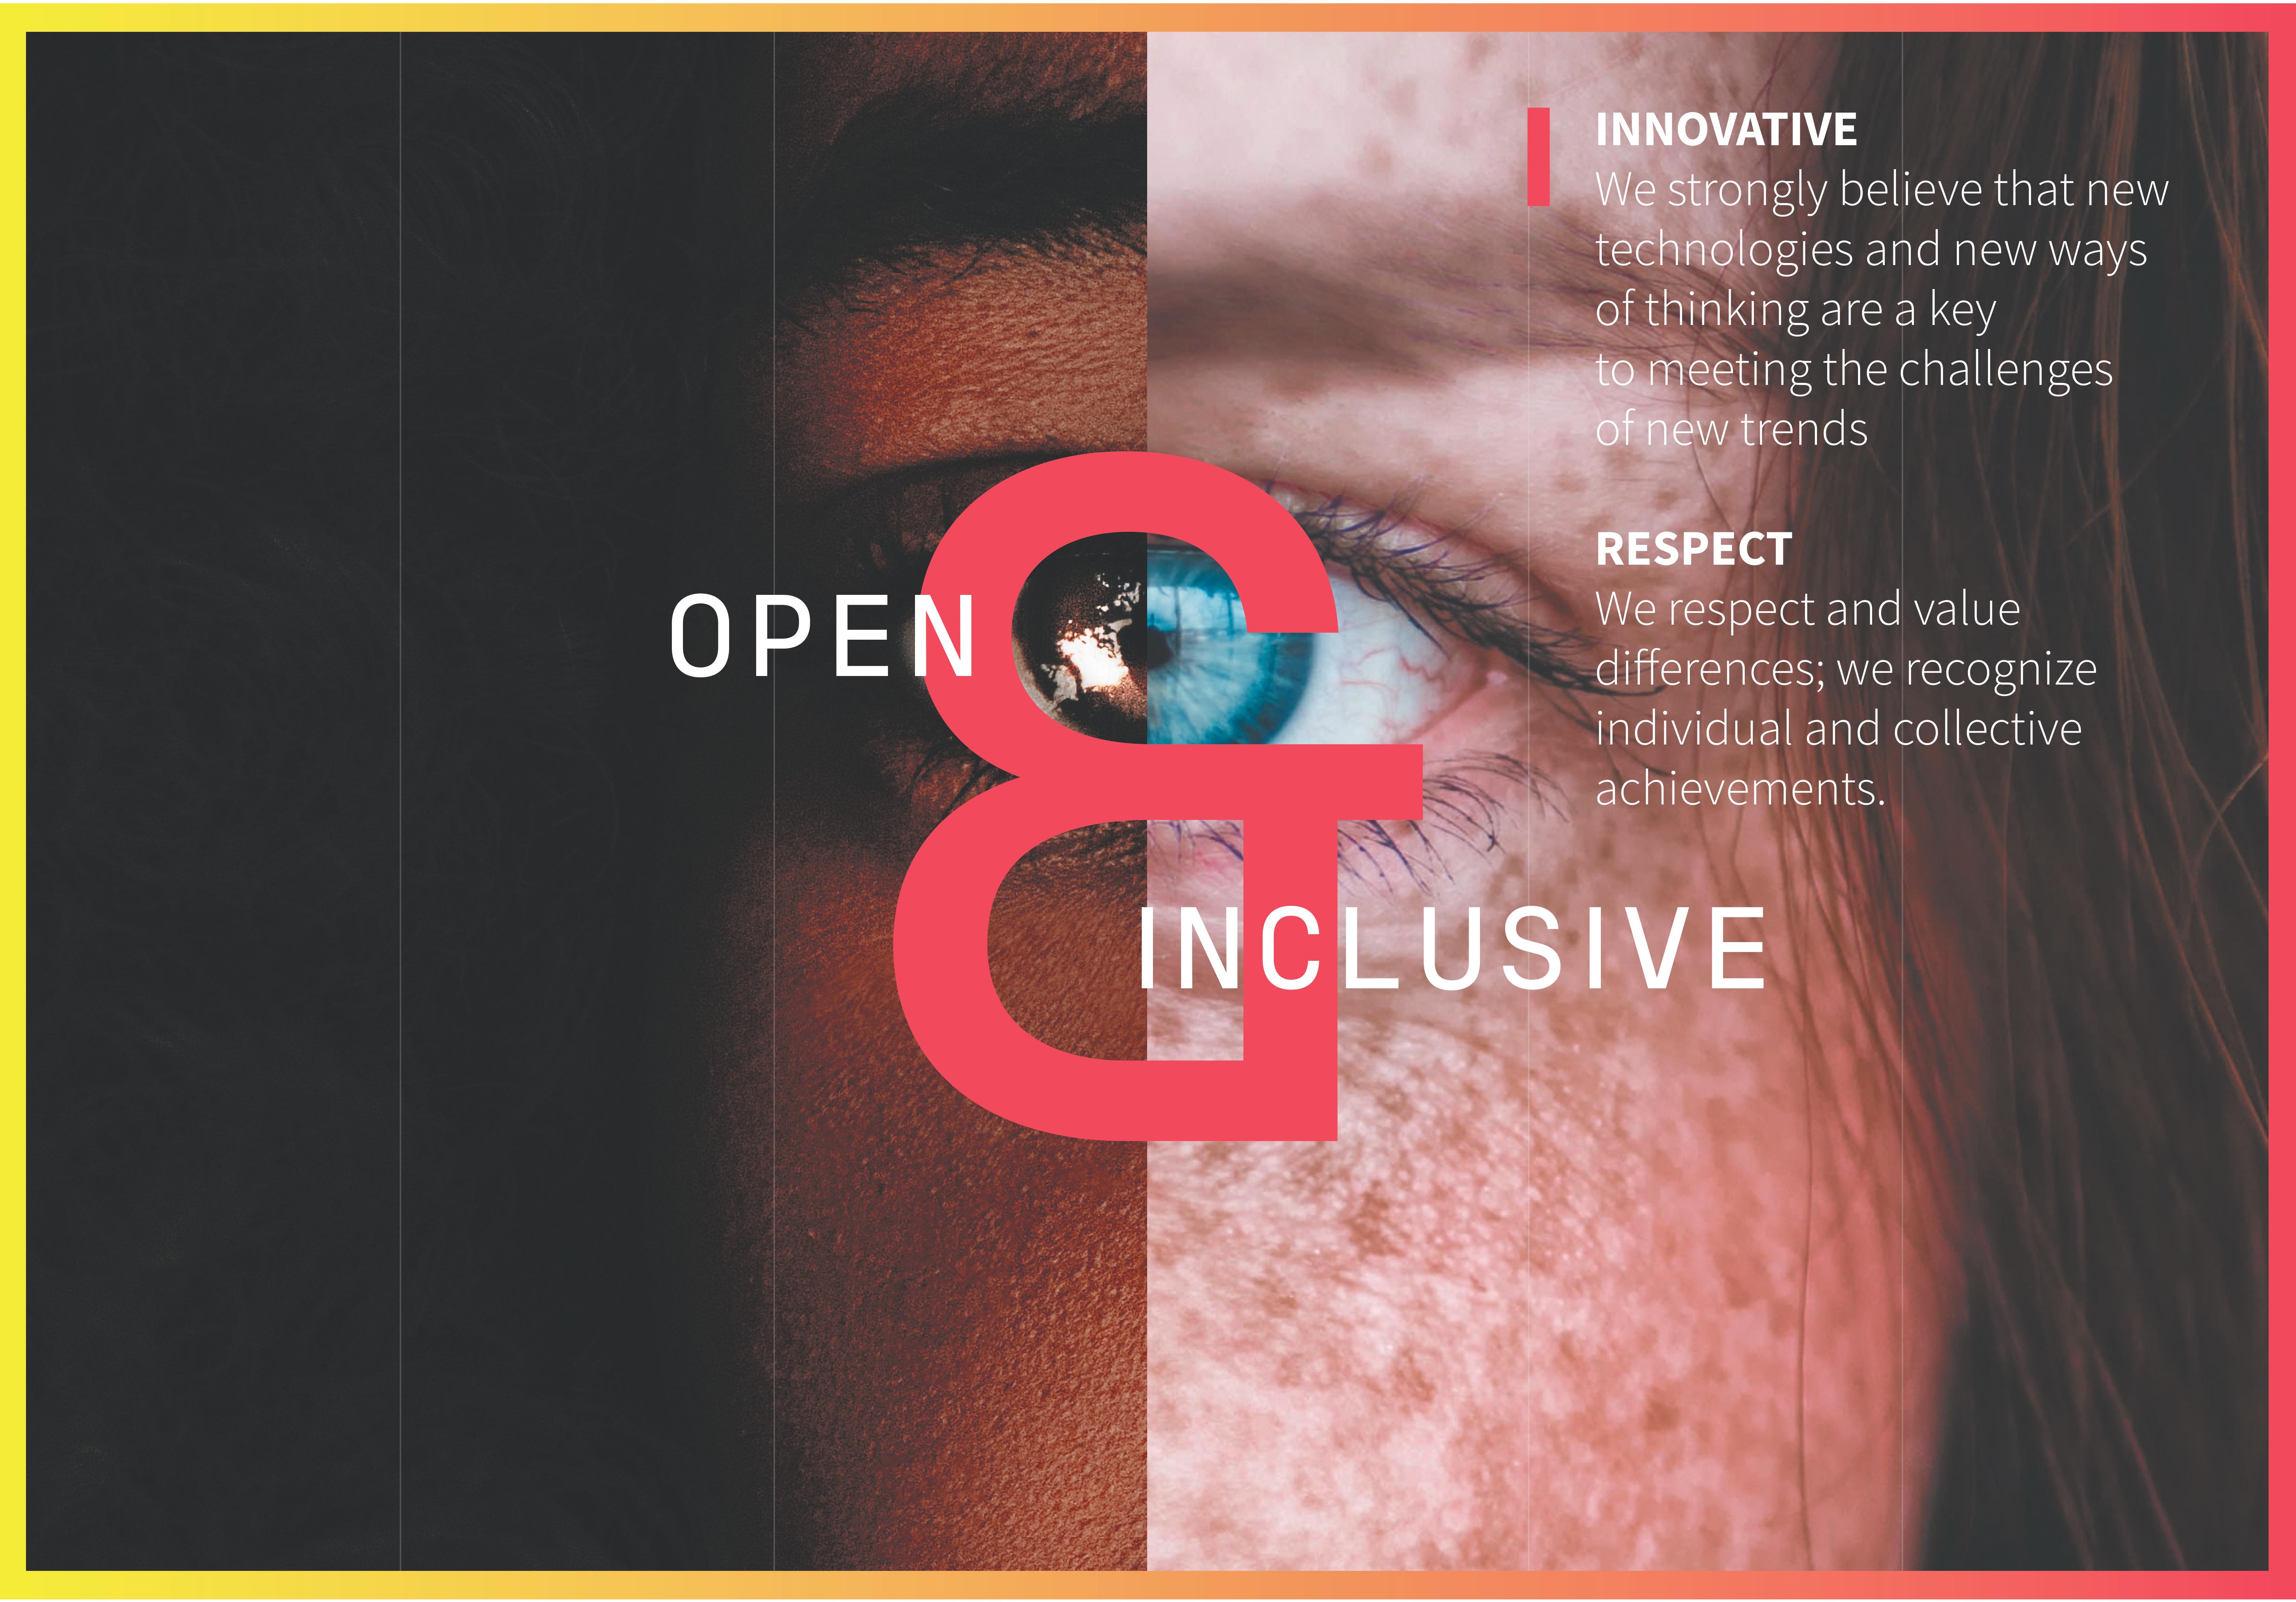 BV_Values_Poster-open-inclusive_EN